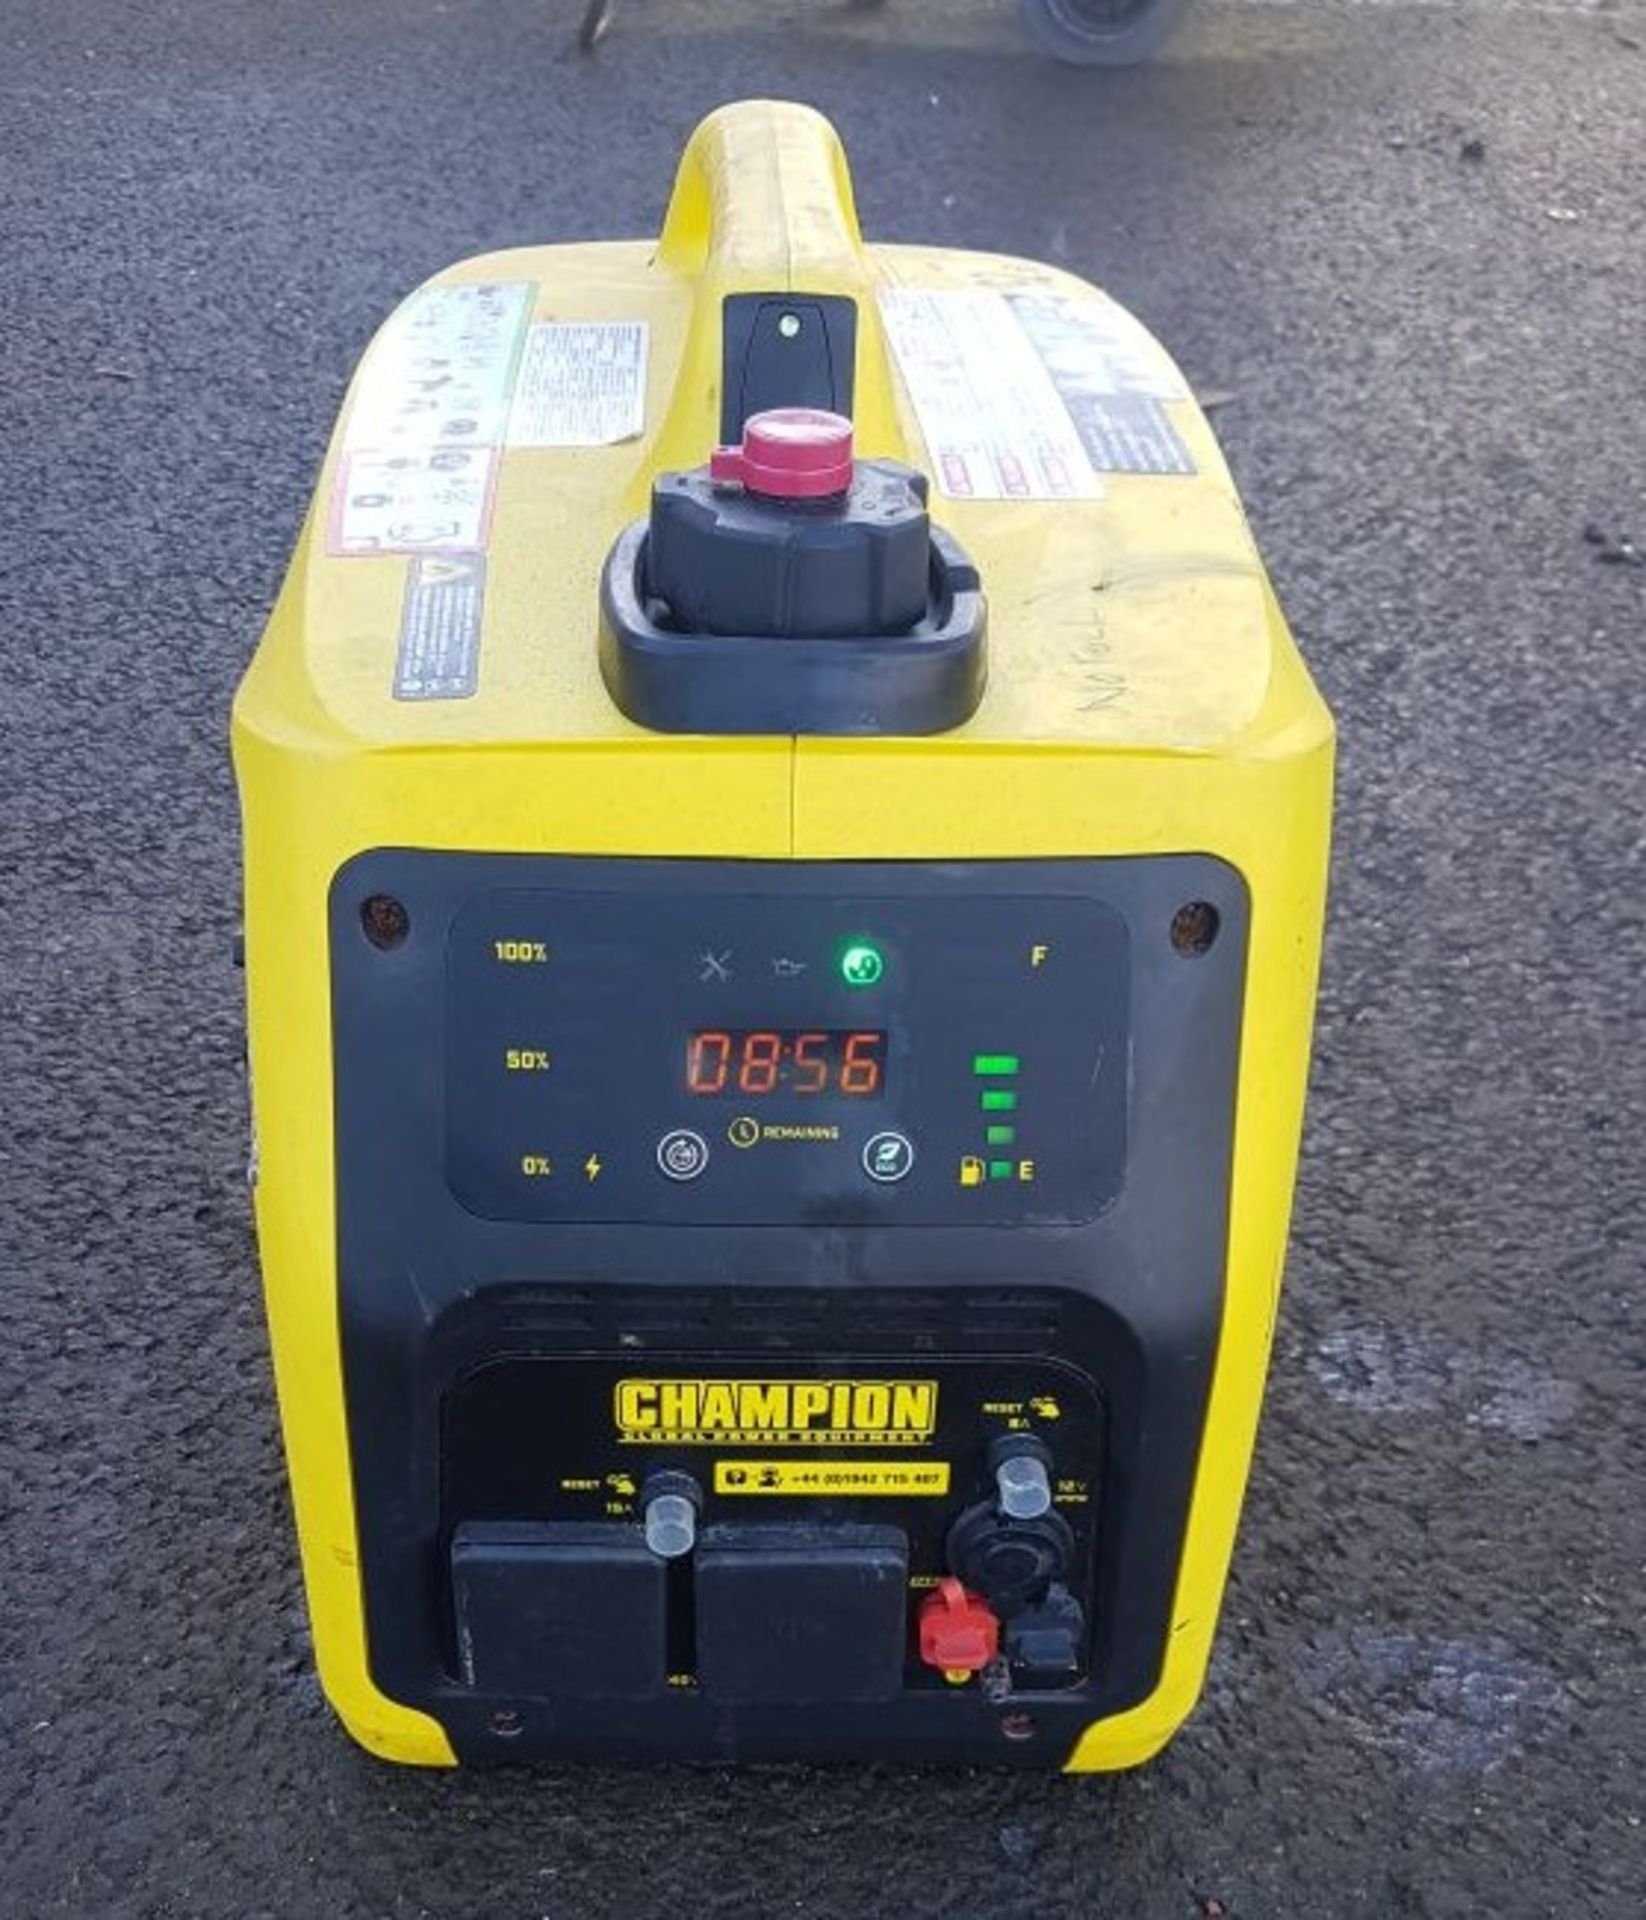 Champion 82001i-DF Dual Fuel Inverter Petrol Generator - Image 4 of 5